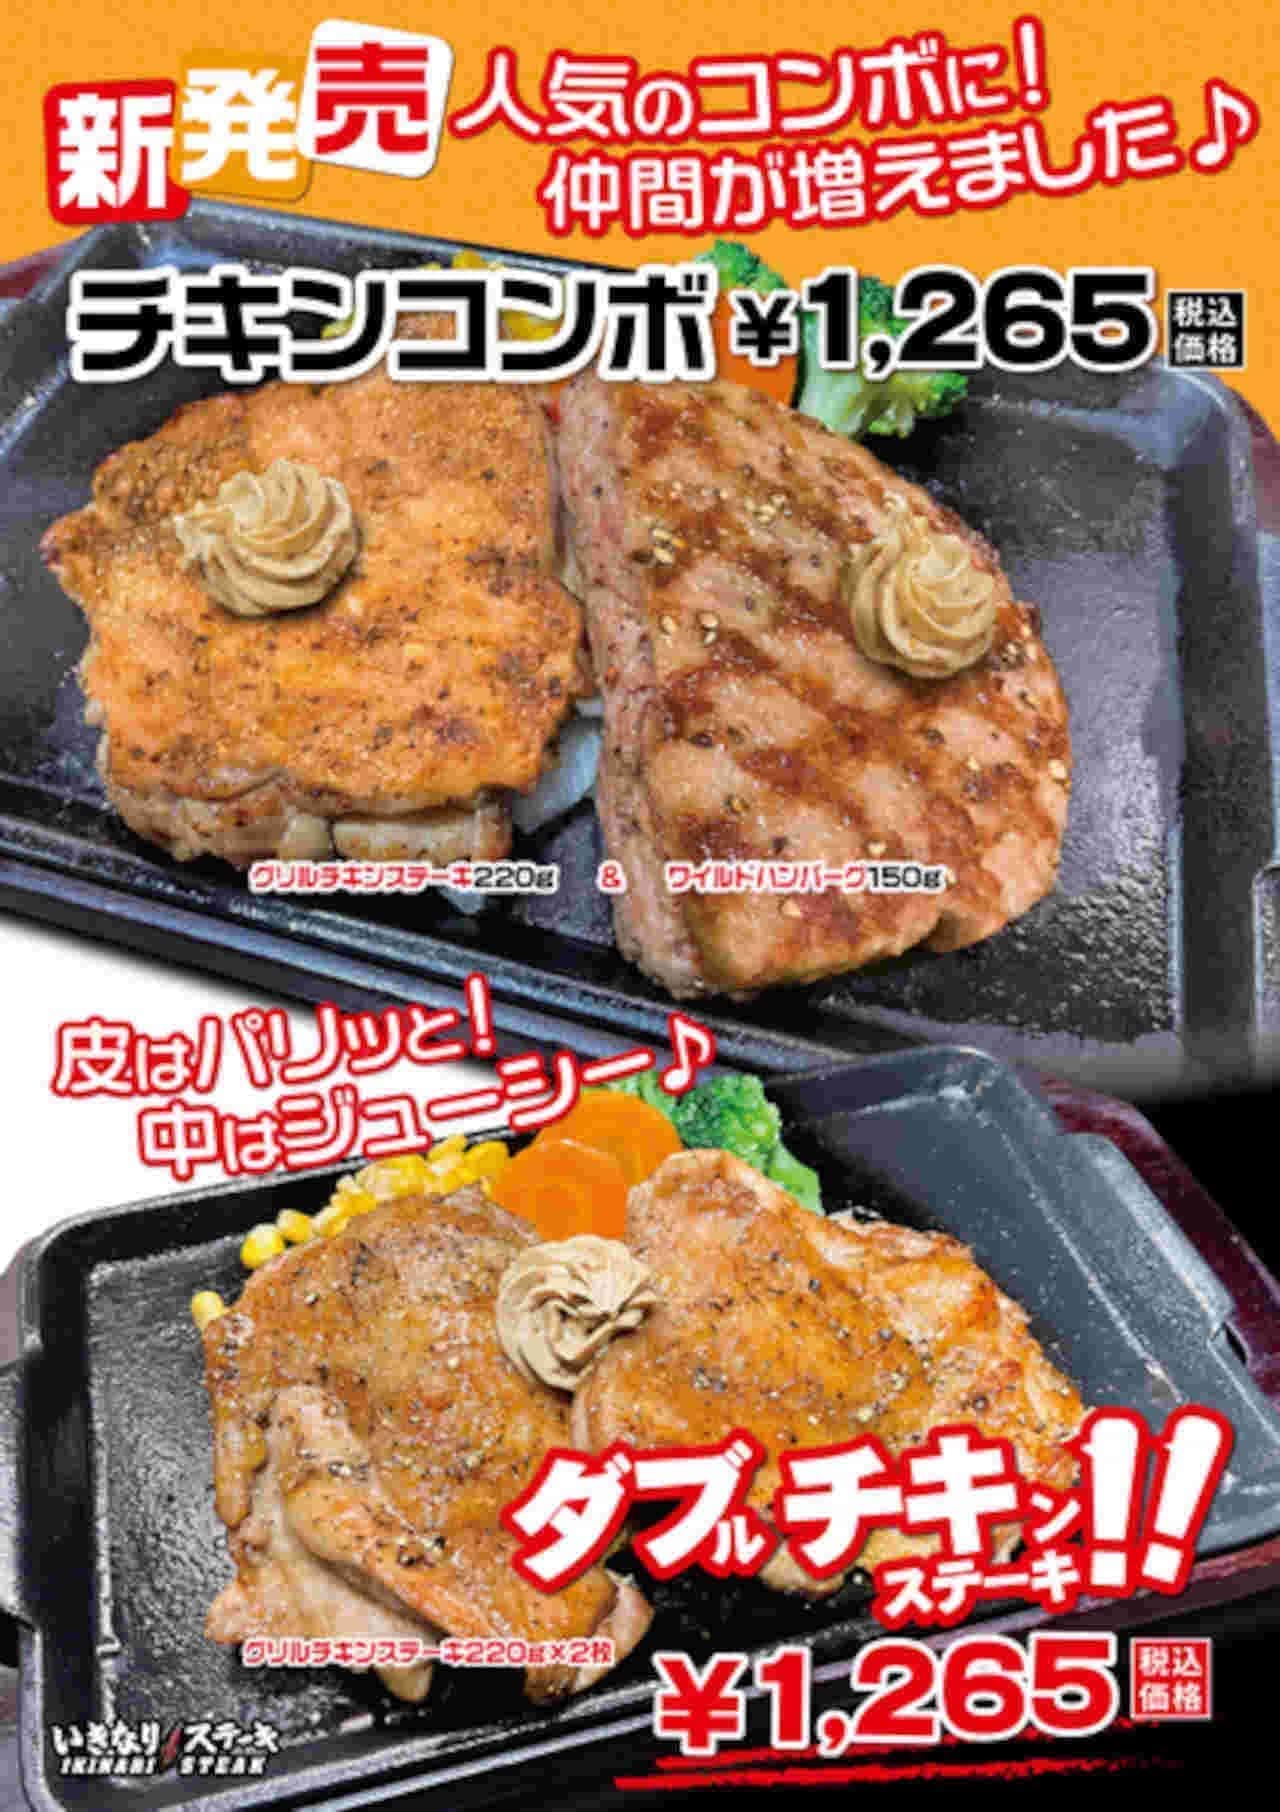 Ikinari! STEAK "Chicken Combo" and "Double Chicken Steak